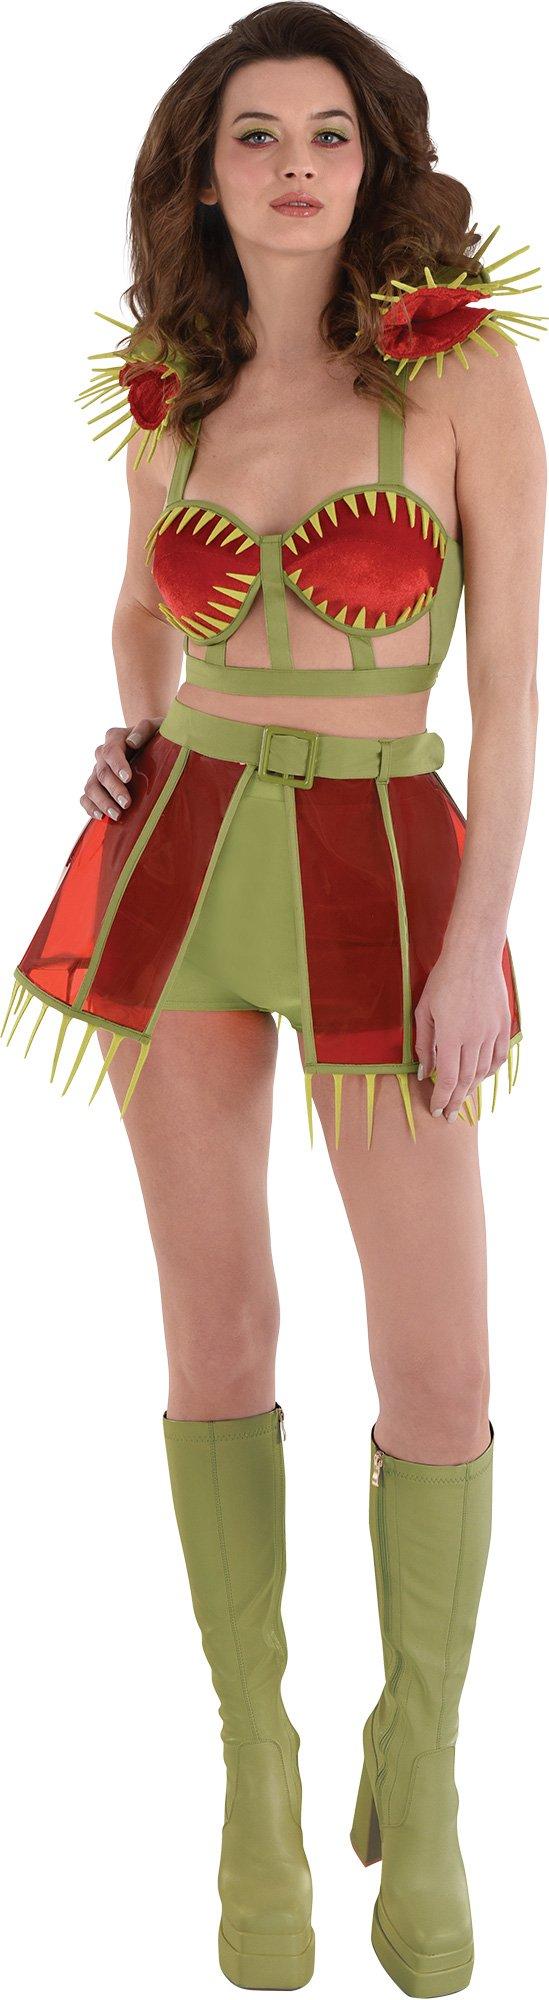 Adult Psychotic Bloody Nurse Costume Accessory Kit